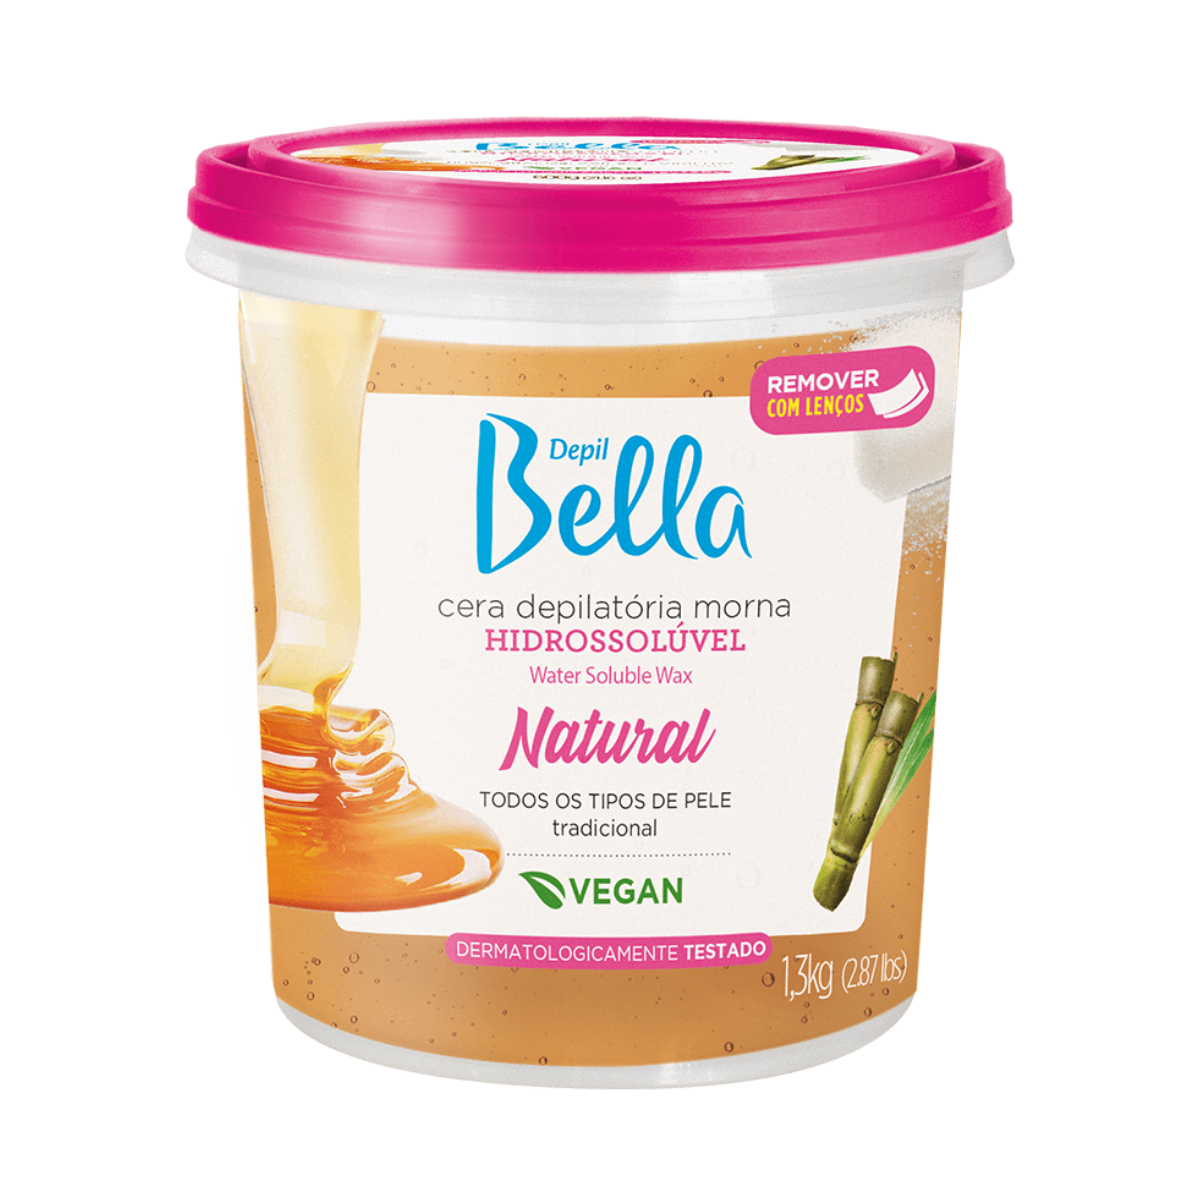 Depil Bella Full Body Sugar Wax Natural, Depiladora 1300g (Oferta 4 Uds) - depilcompany